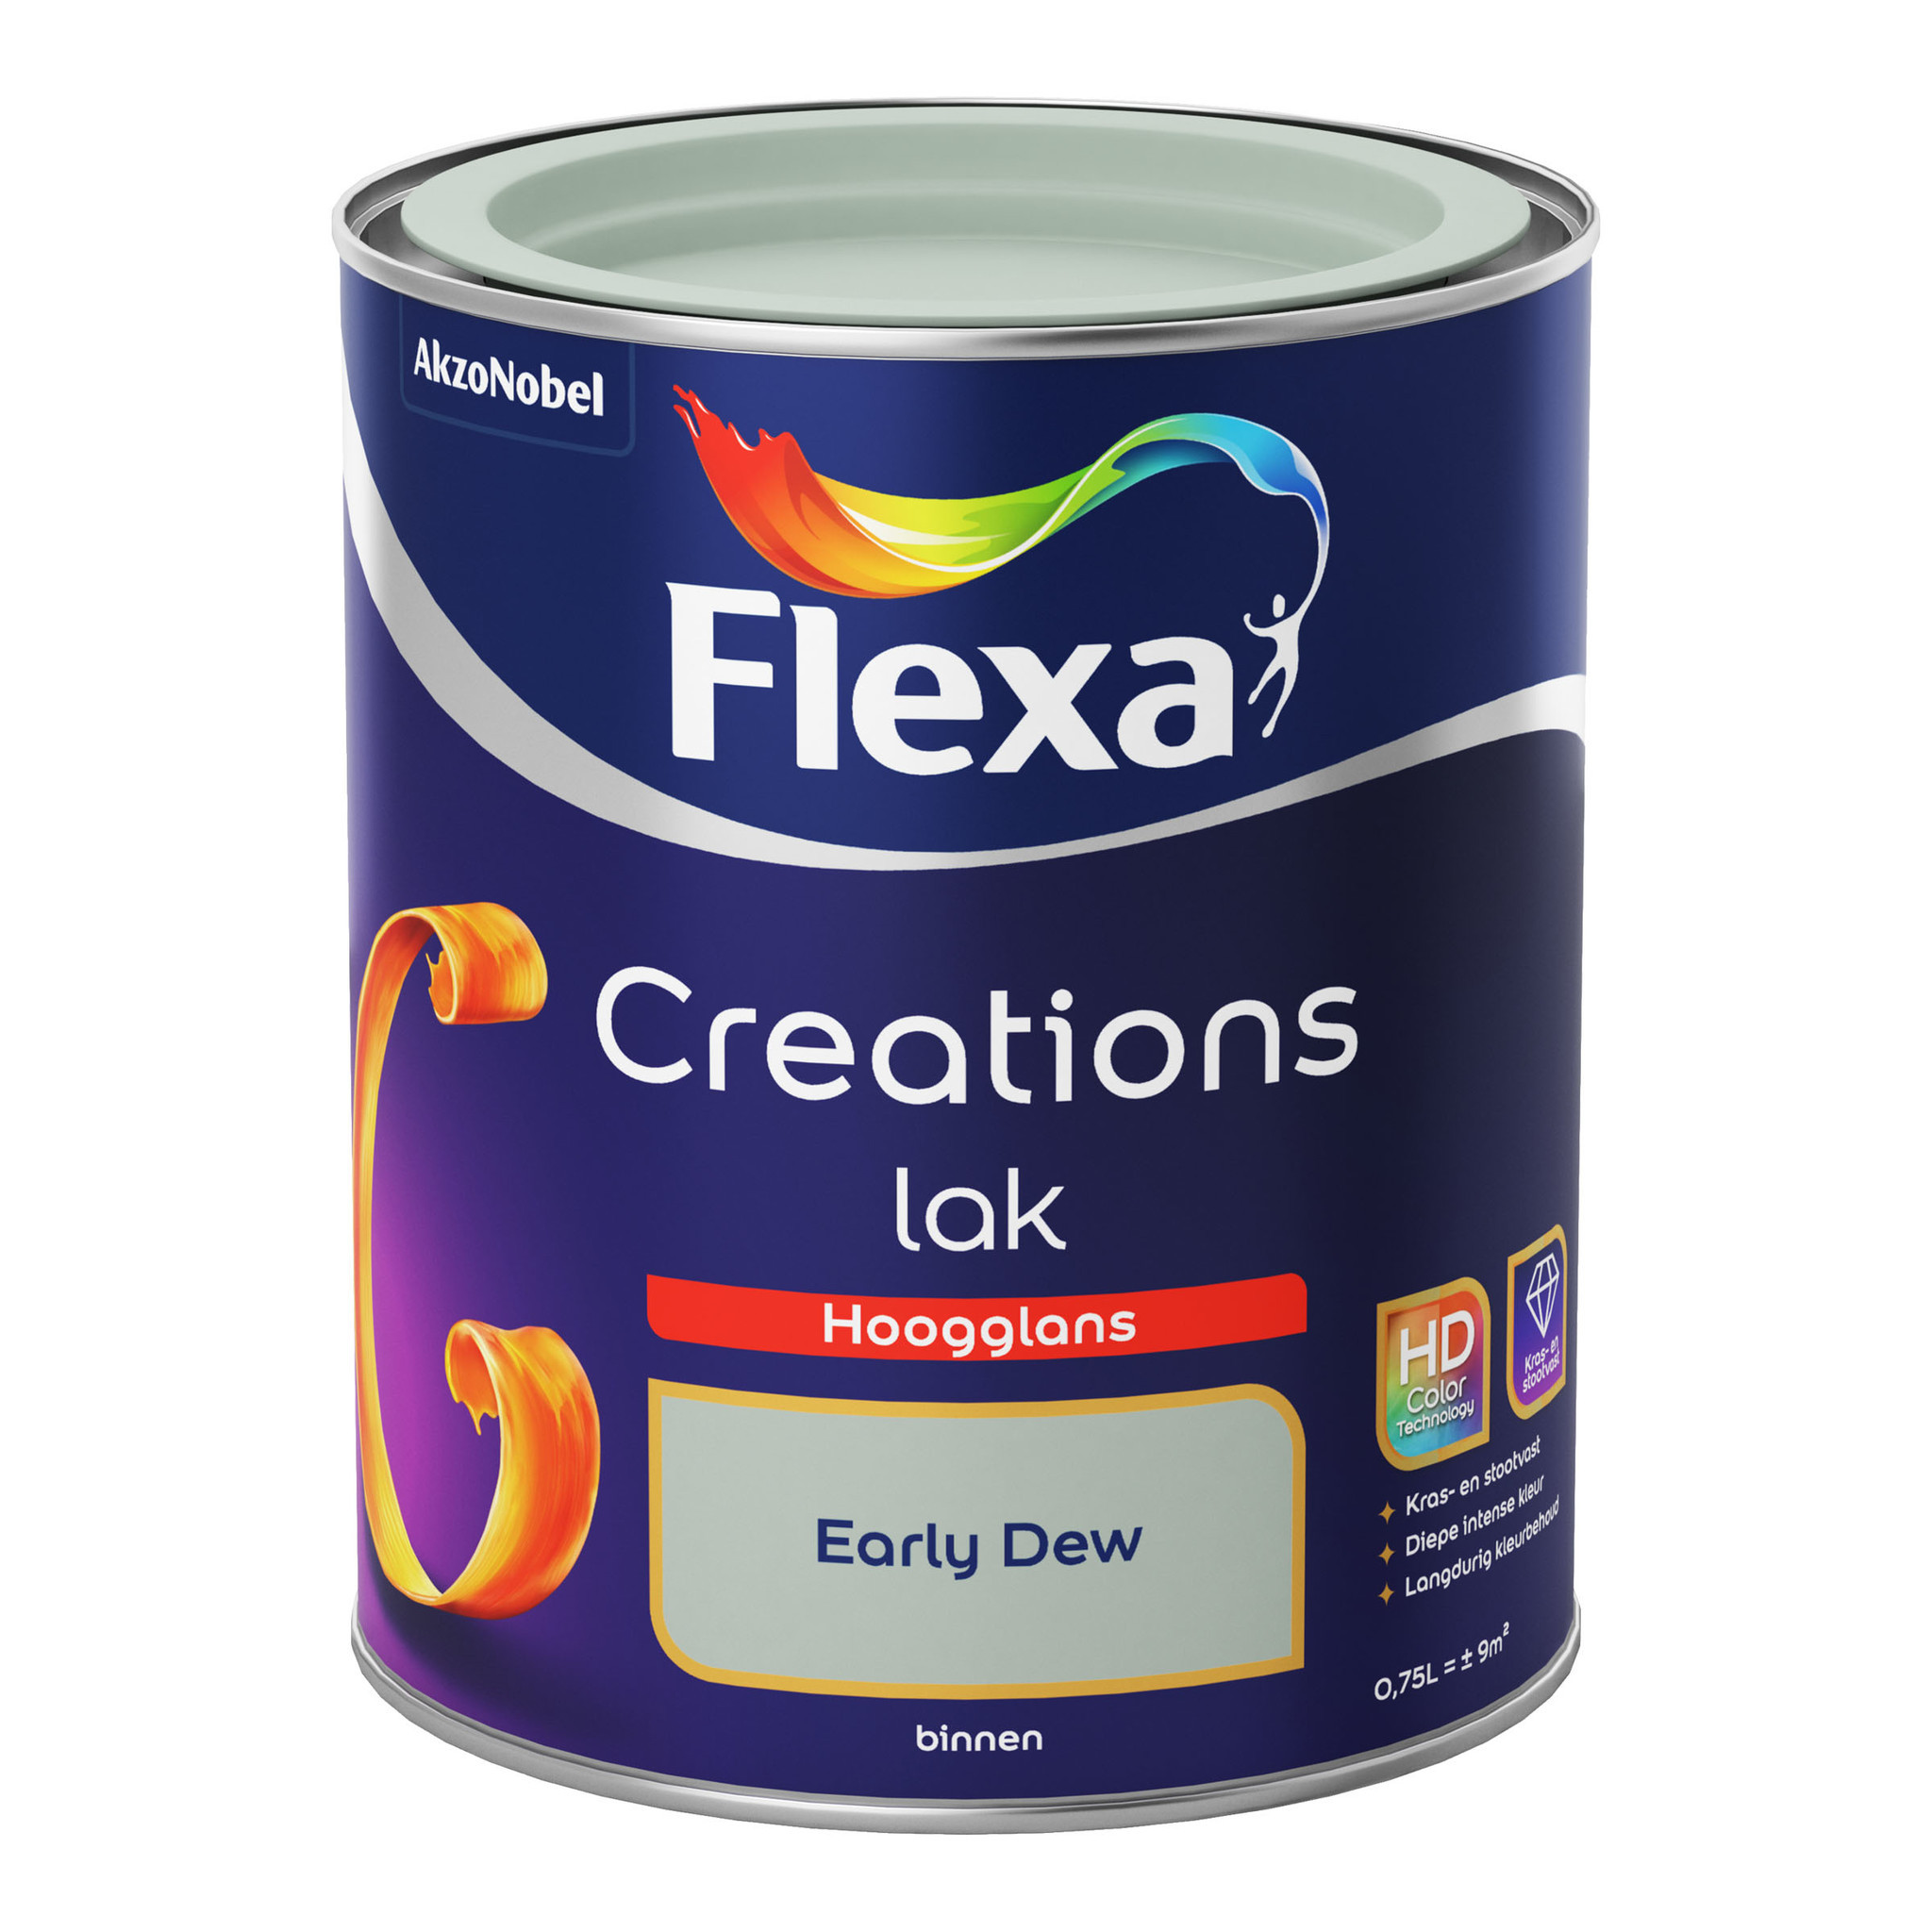 Flexa Creations Lak Hoogglans - Early Dew